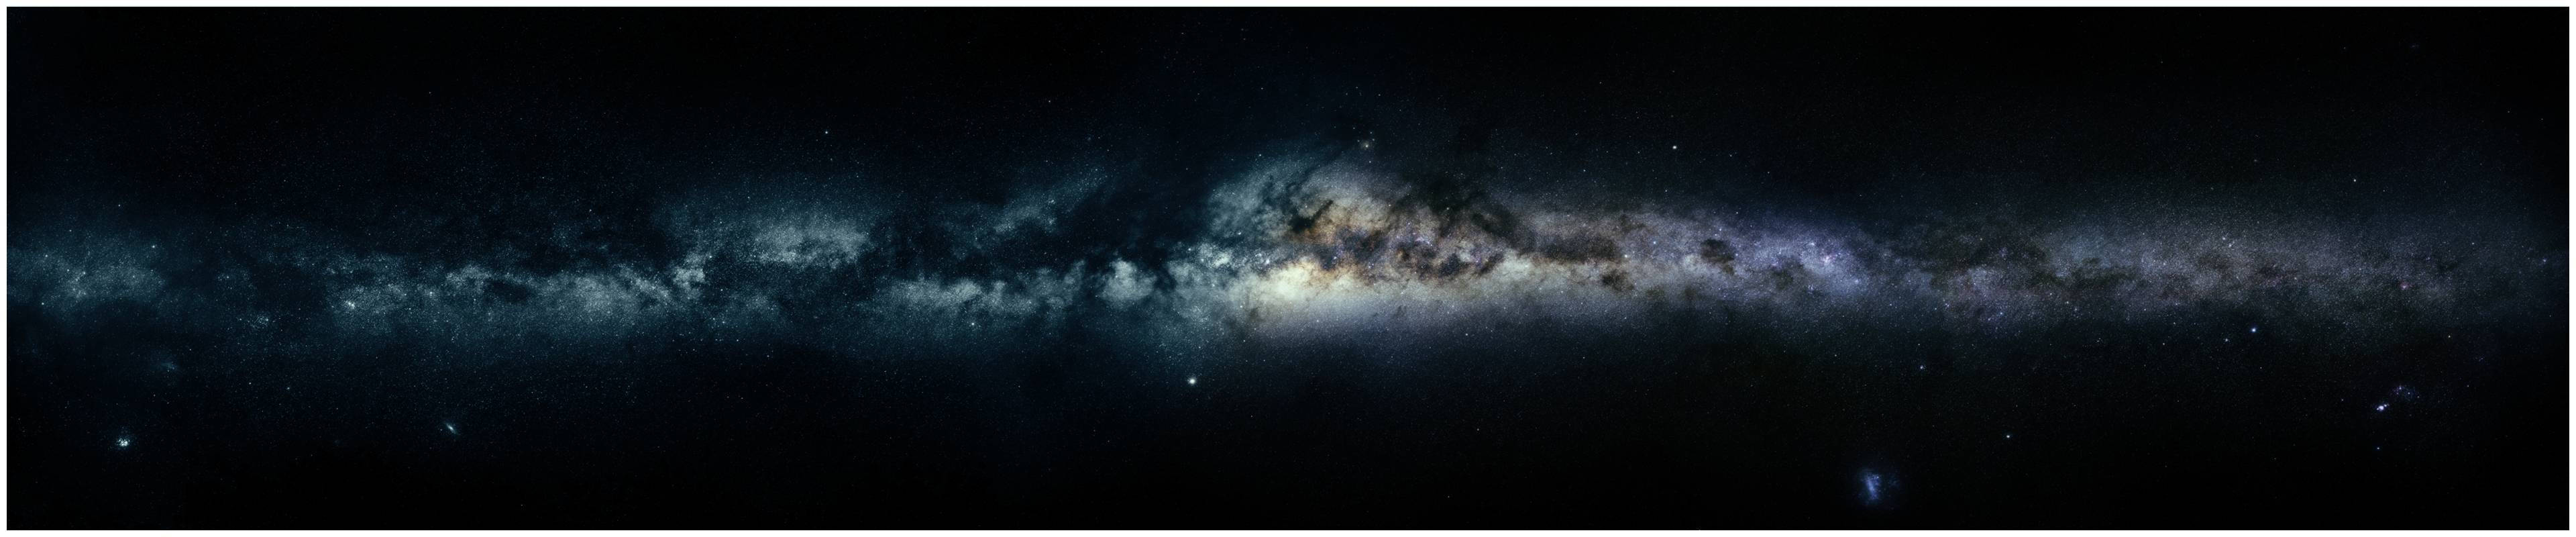 3monitor Galaxy Wallpaper